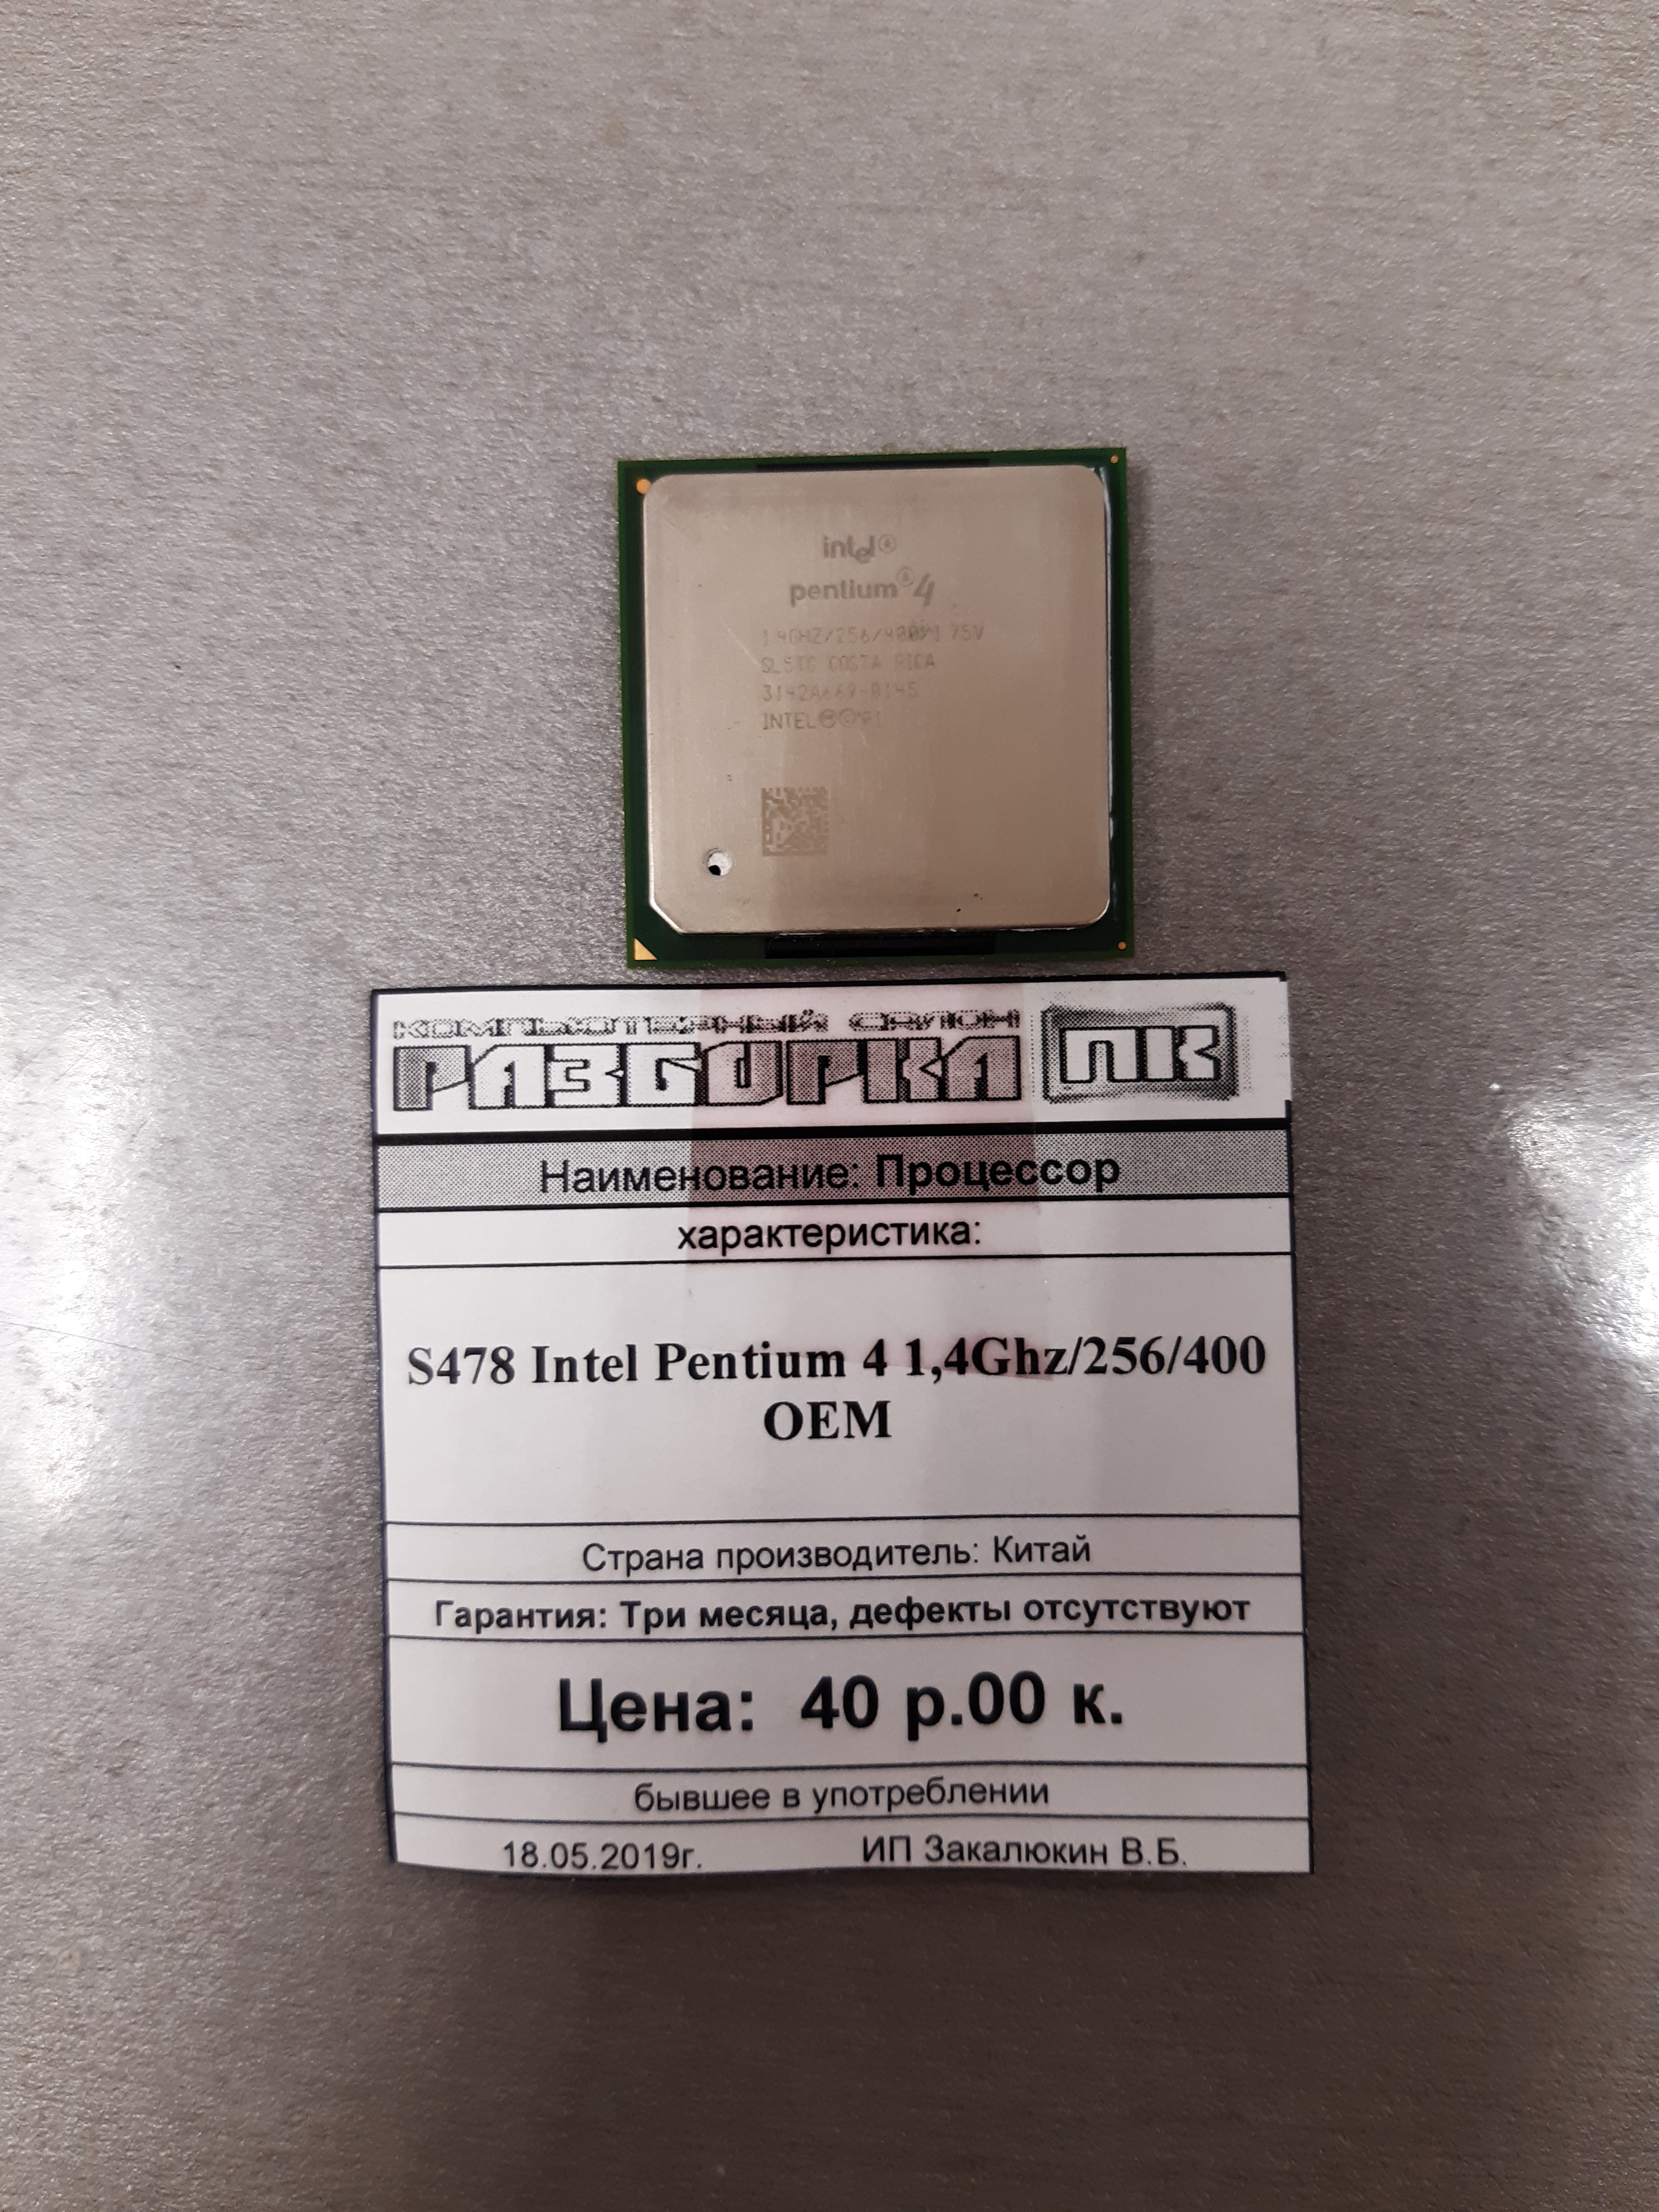 Процессор S478 Pentium 4 1,4Ghz/256/400 OEM